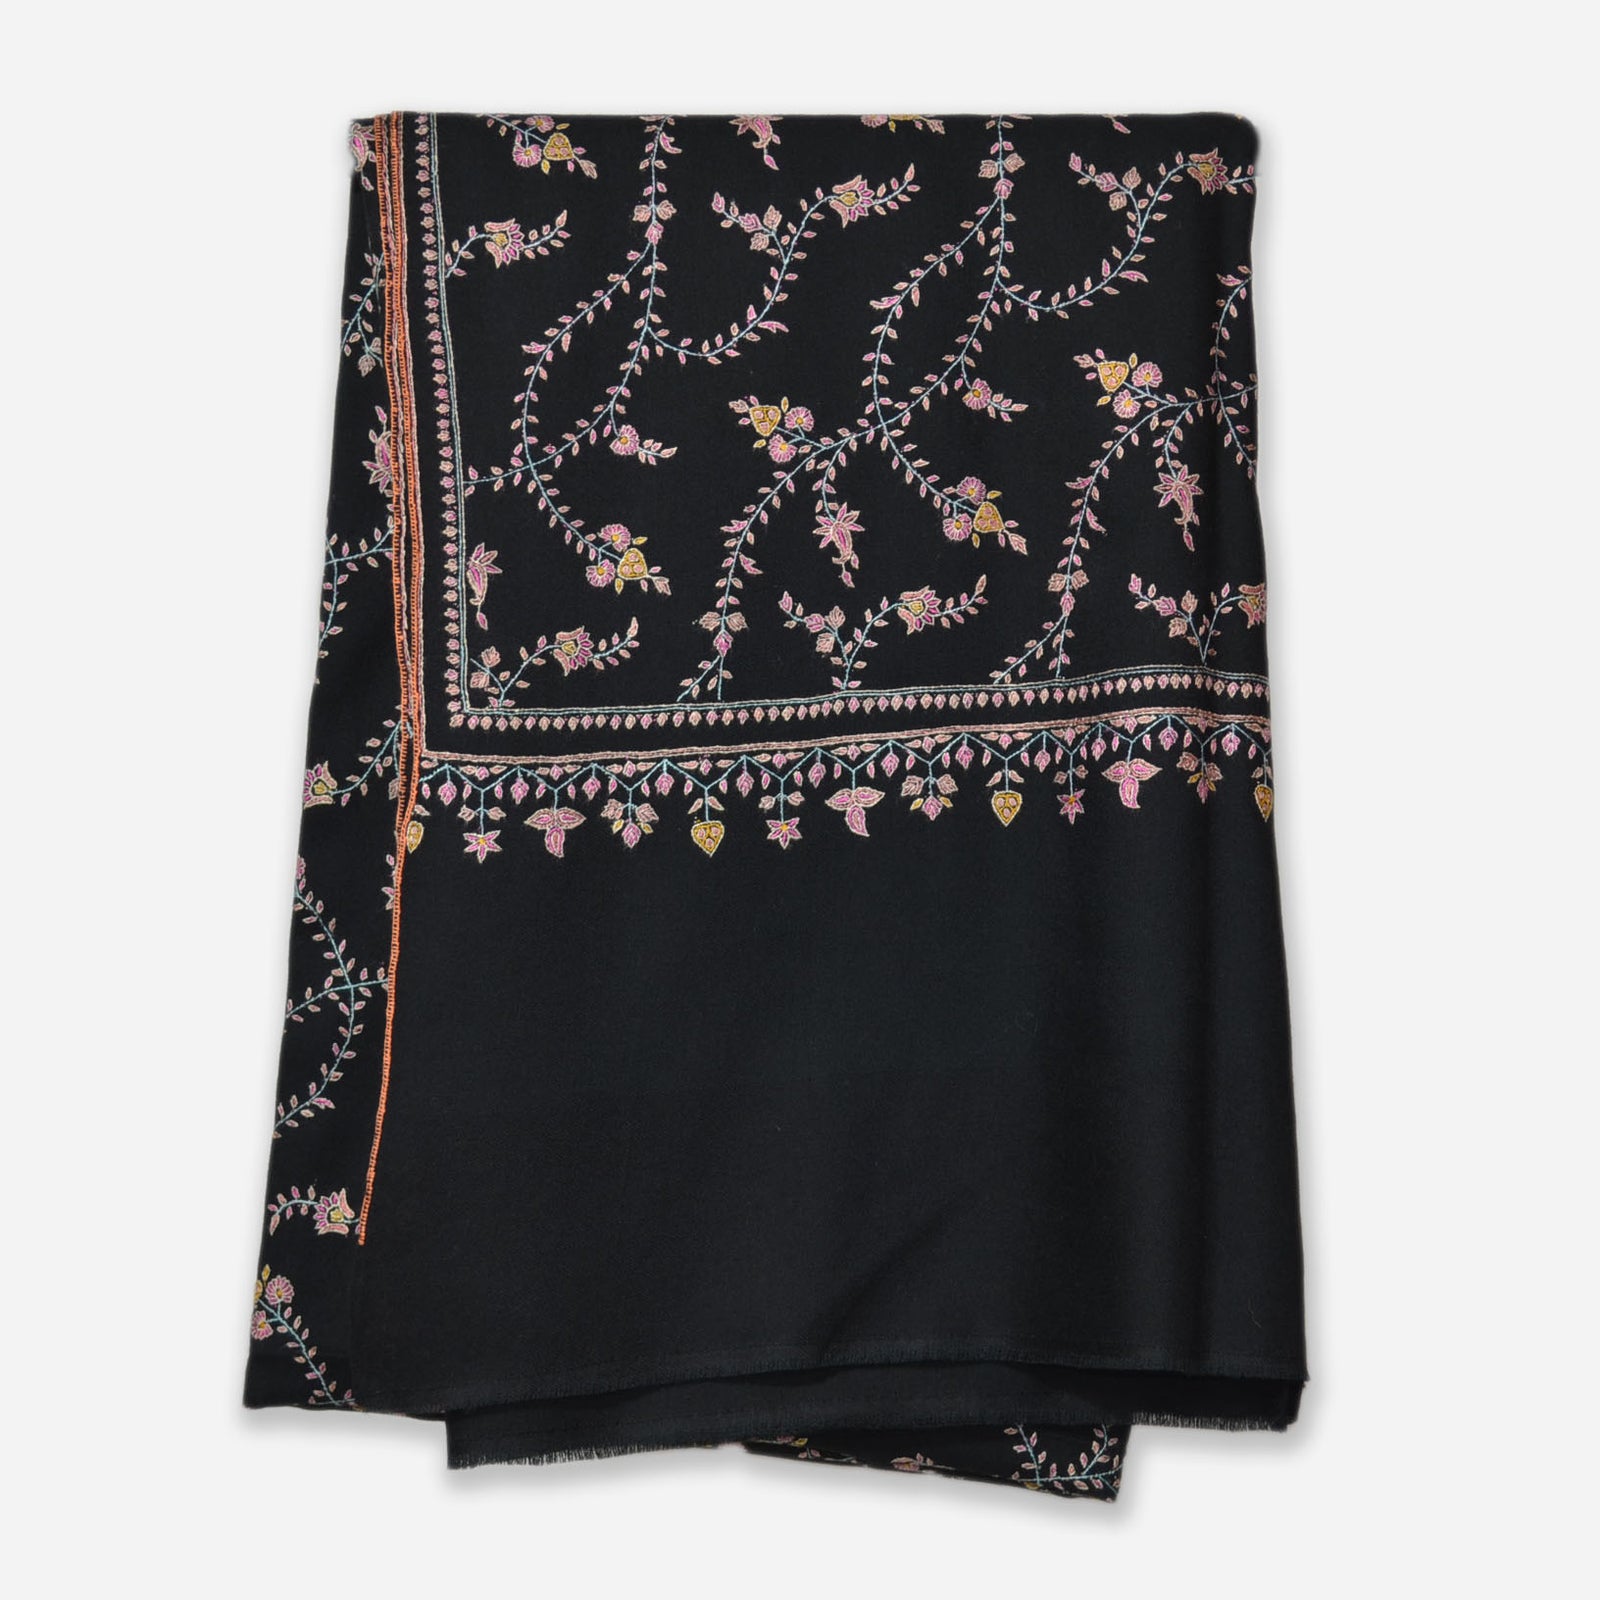 Black Jali Embroidery Cashmere Travel Wrap